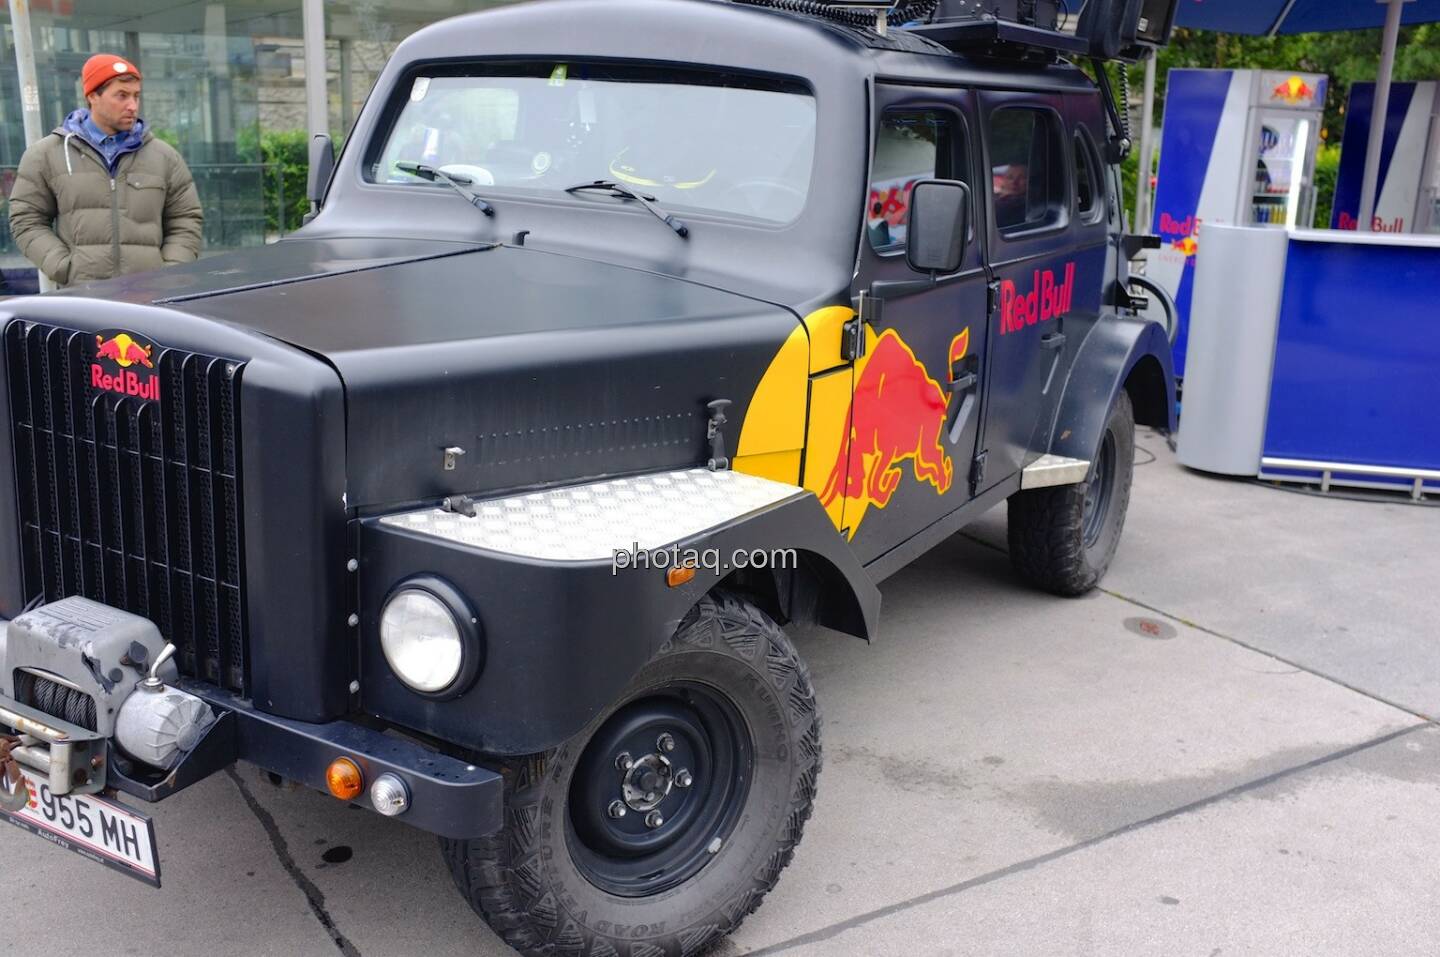 Red Bull Auto, Streetlife Festival 2014